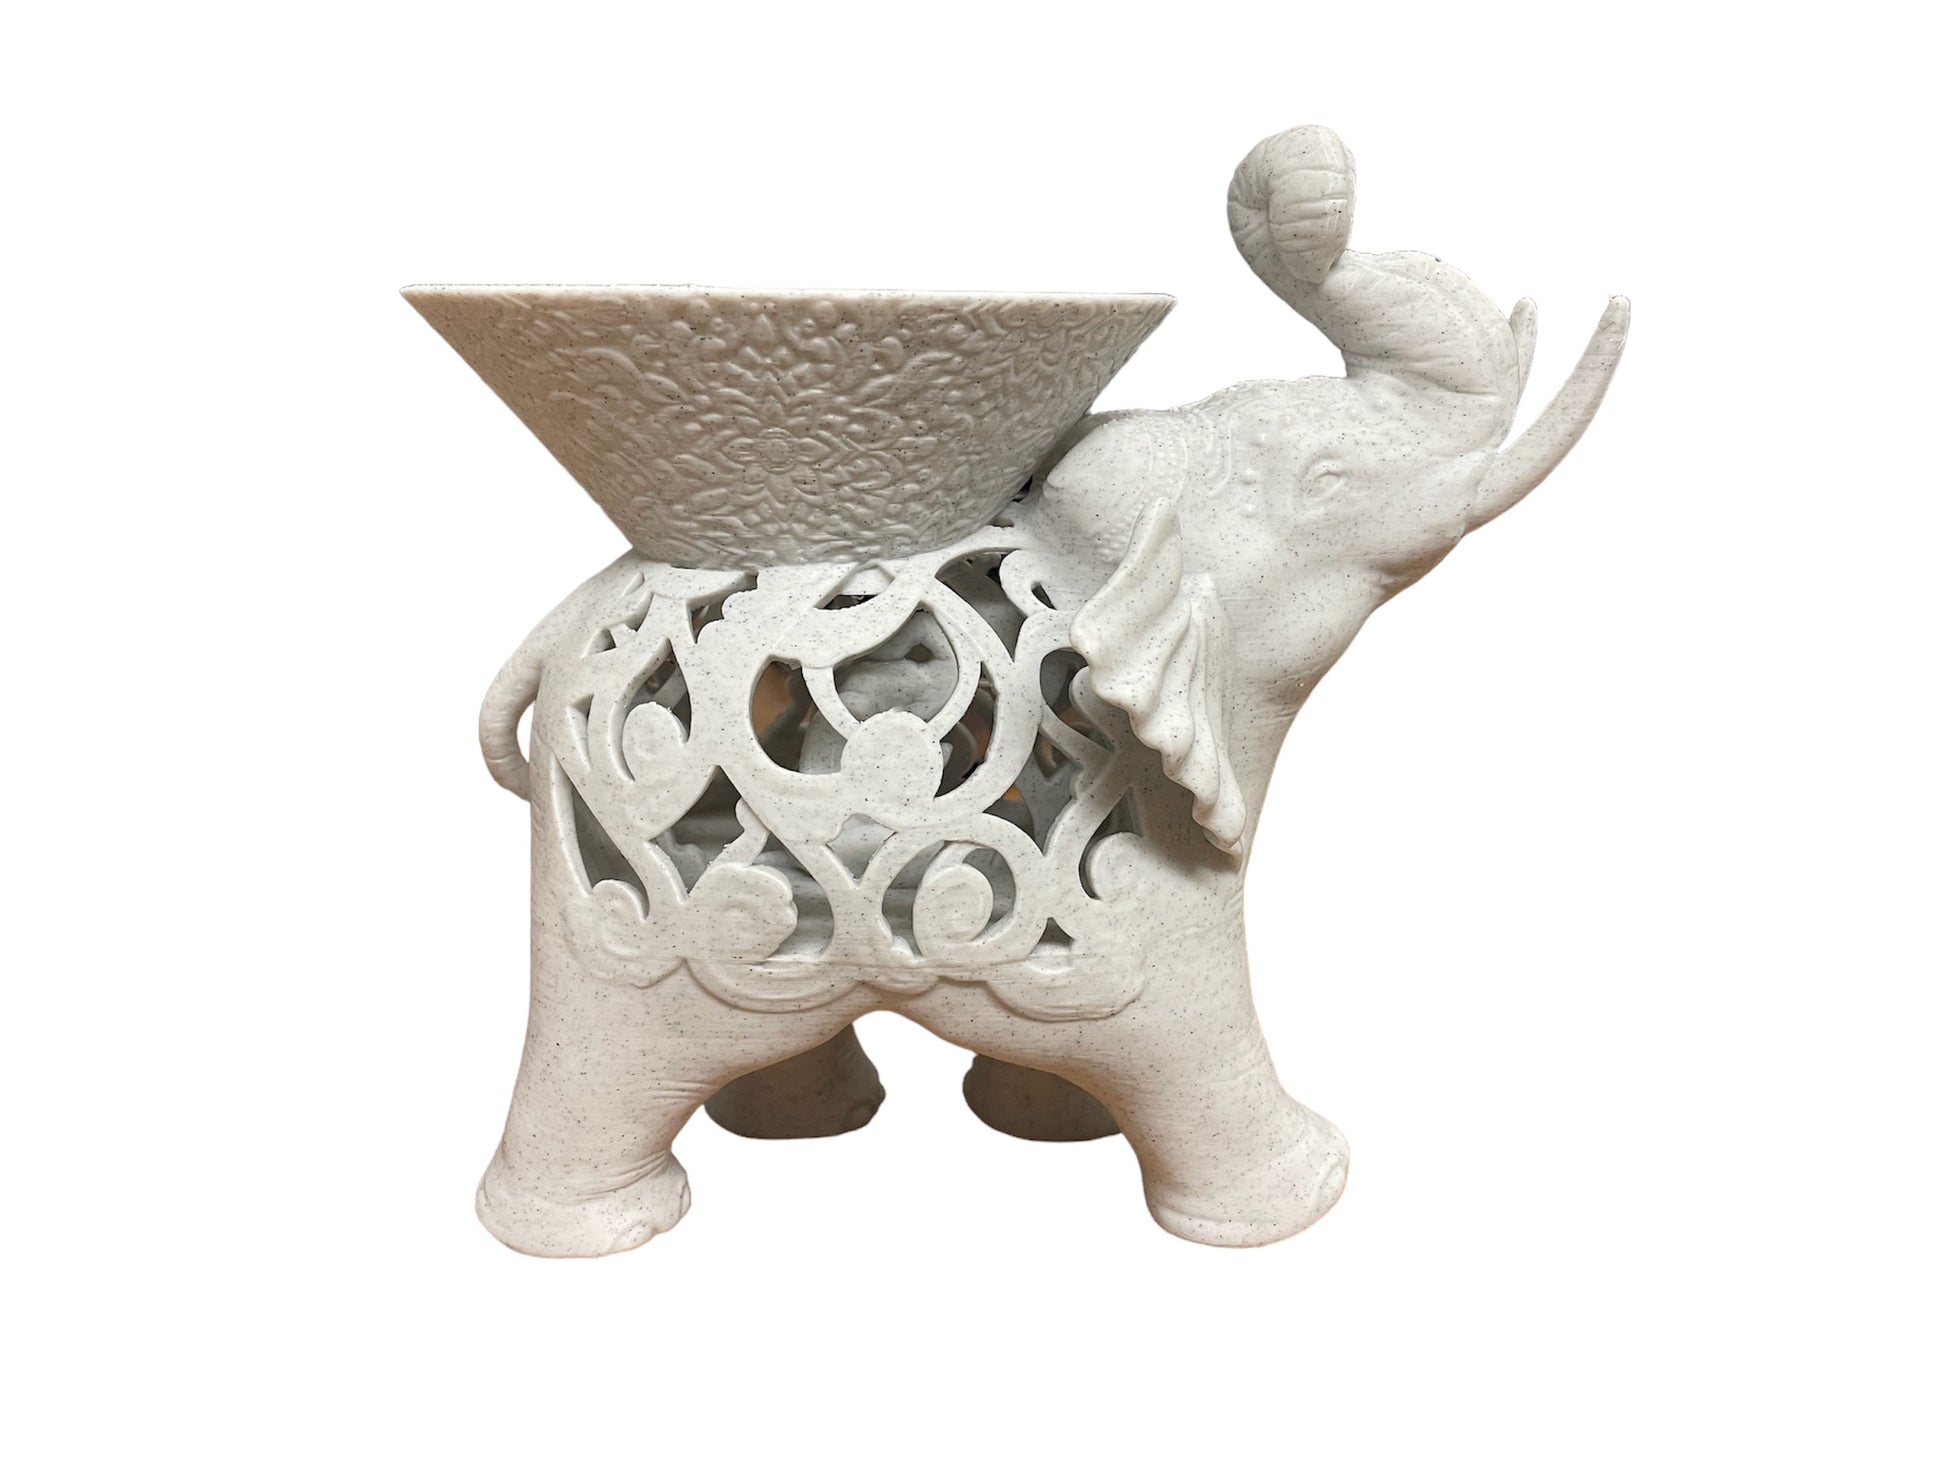 Artisan-Crafted Elegance: 3D Printed Marble Elephant Incense Holder